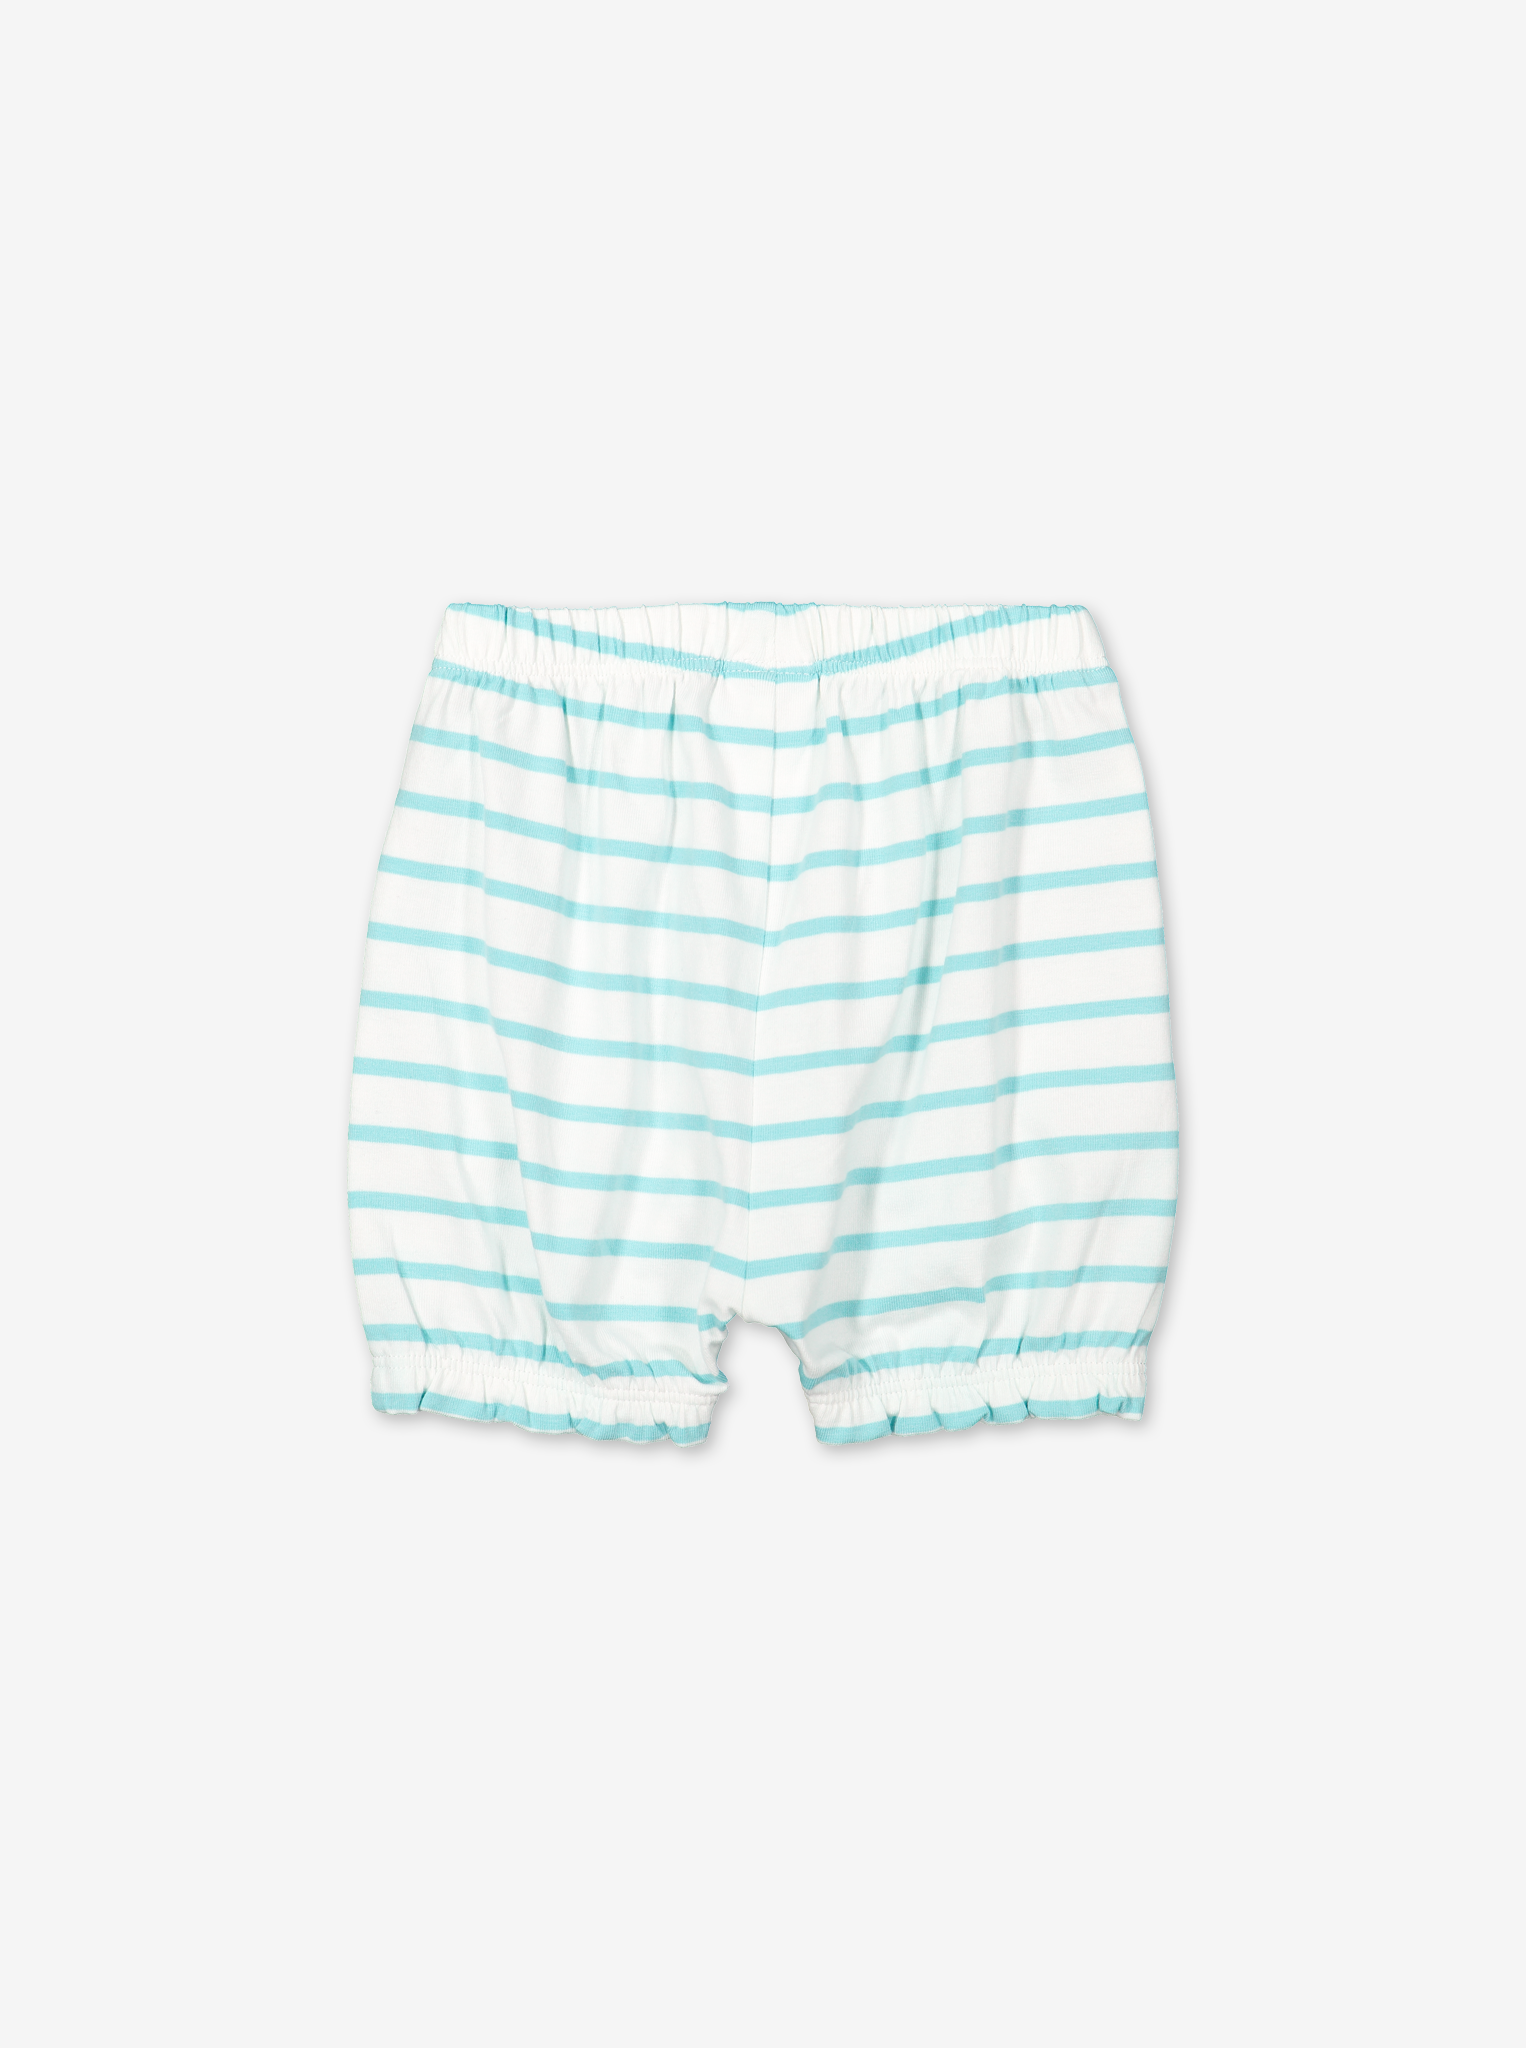 Pond Print Baby Dress &amp; Shorts Set-Girl-0-1y-Turquoise